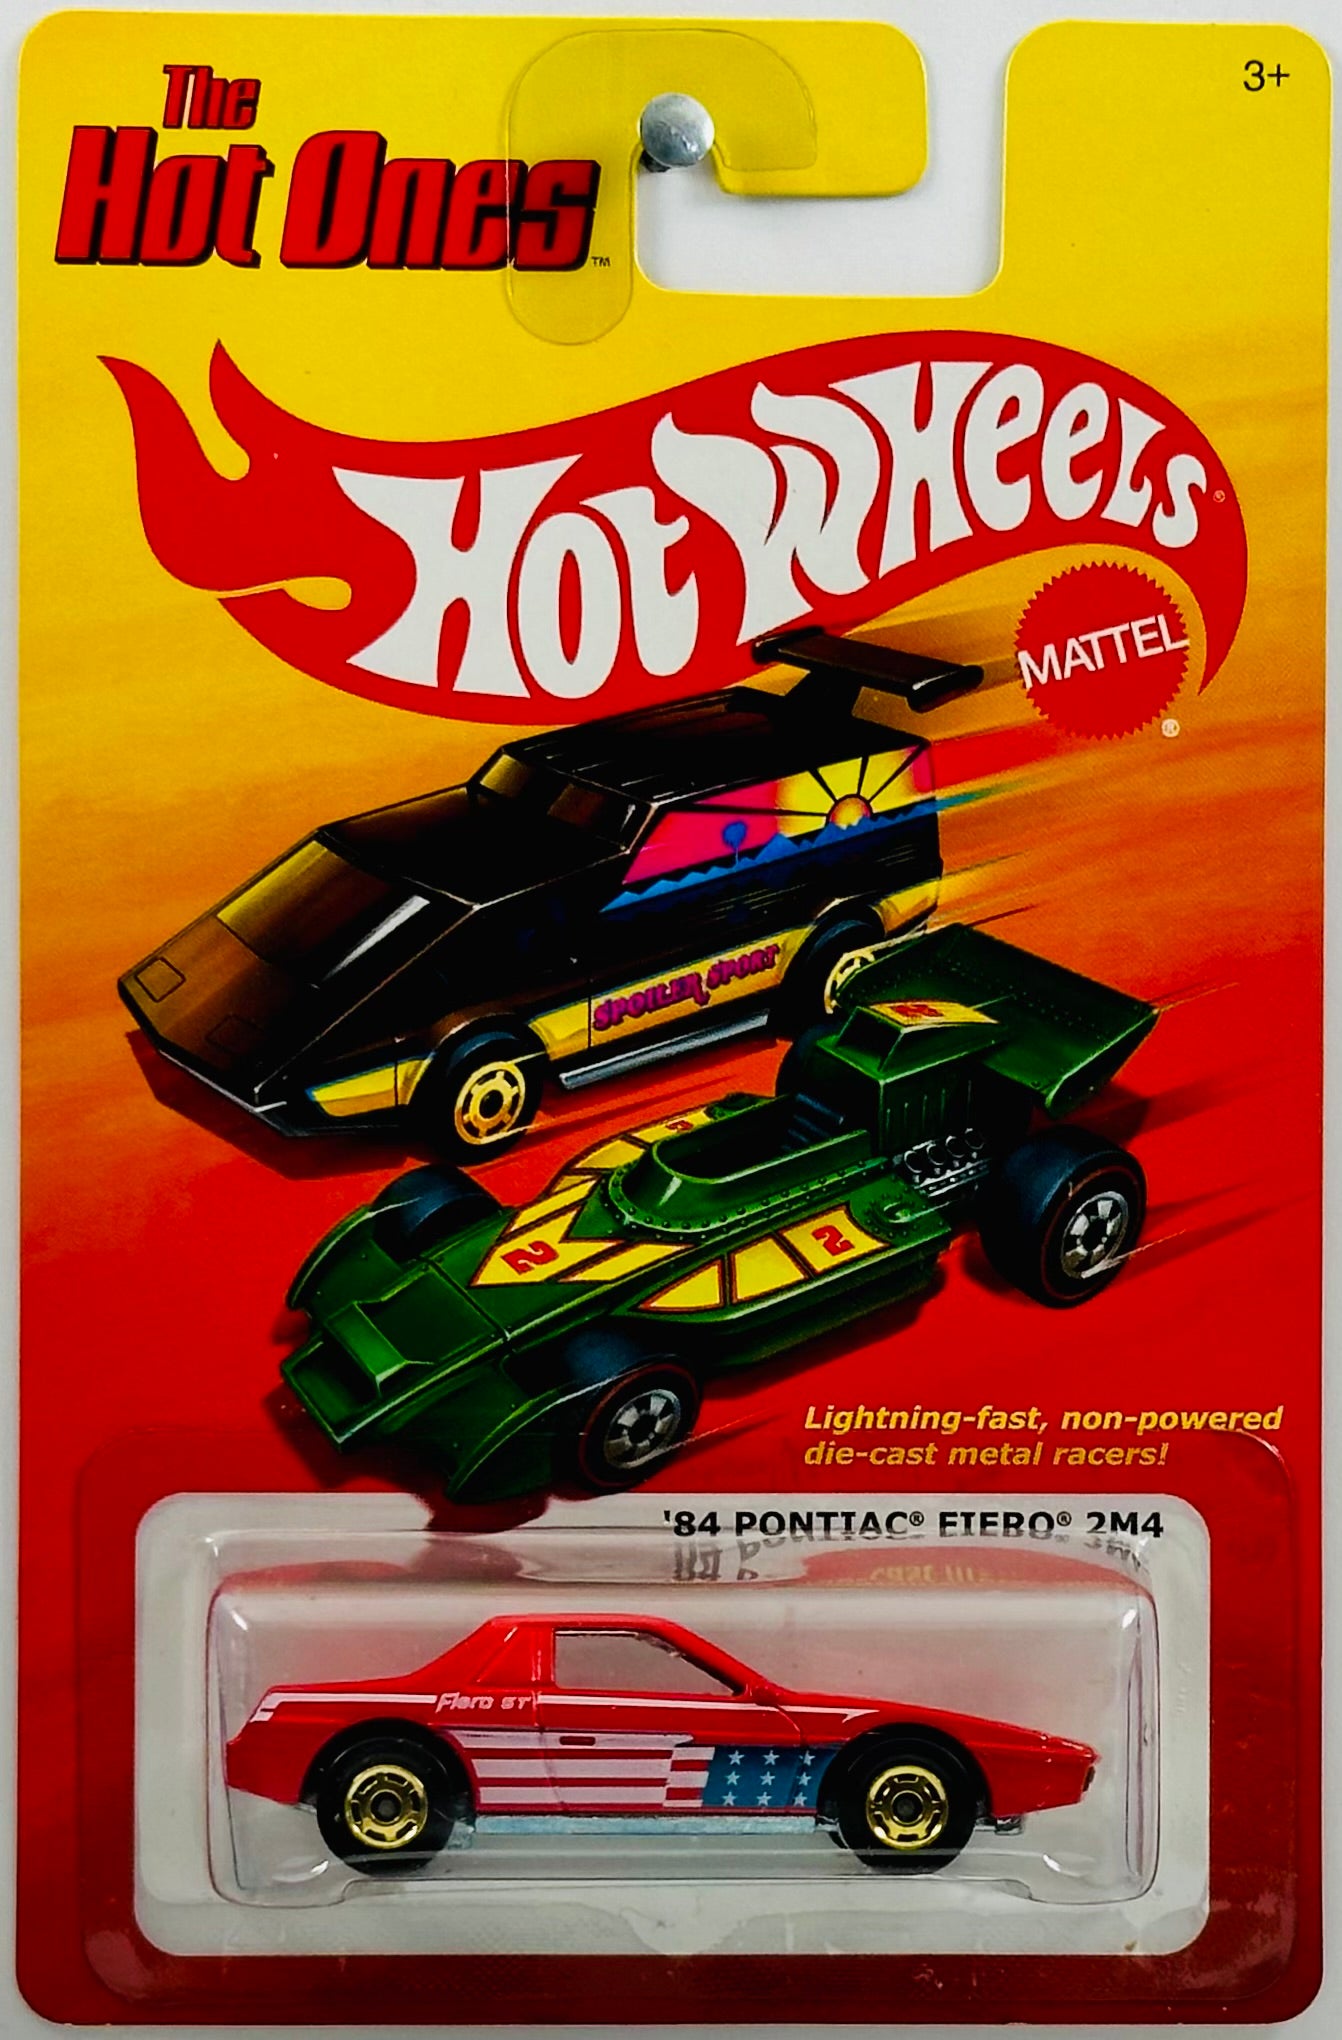 Hot Wheels 2011 - The Hot Ones - '84 Pontiac Fiero 2M4 - Red - Gold Hot Ones - Metal/Metal - Lightning Fast Metal Racers